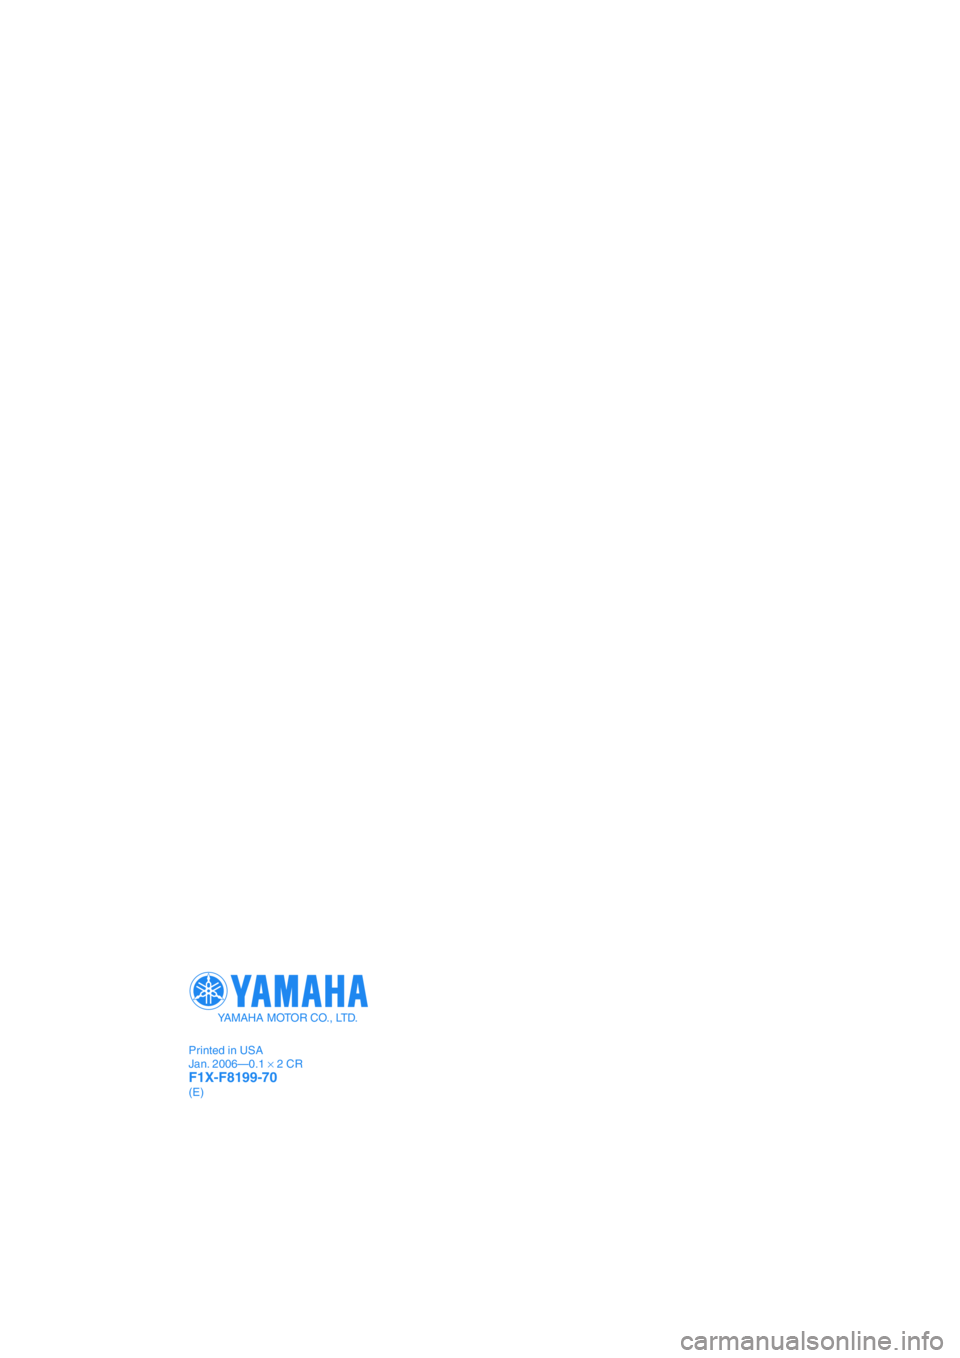 YAMAHA FX HO 2006  Owners Manual YAMAHA MOTOR CO., LTD.
Printed in USA
Jan. 2006—0.1 × 2 CR
F1X-F8199-70(E) 